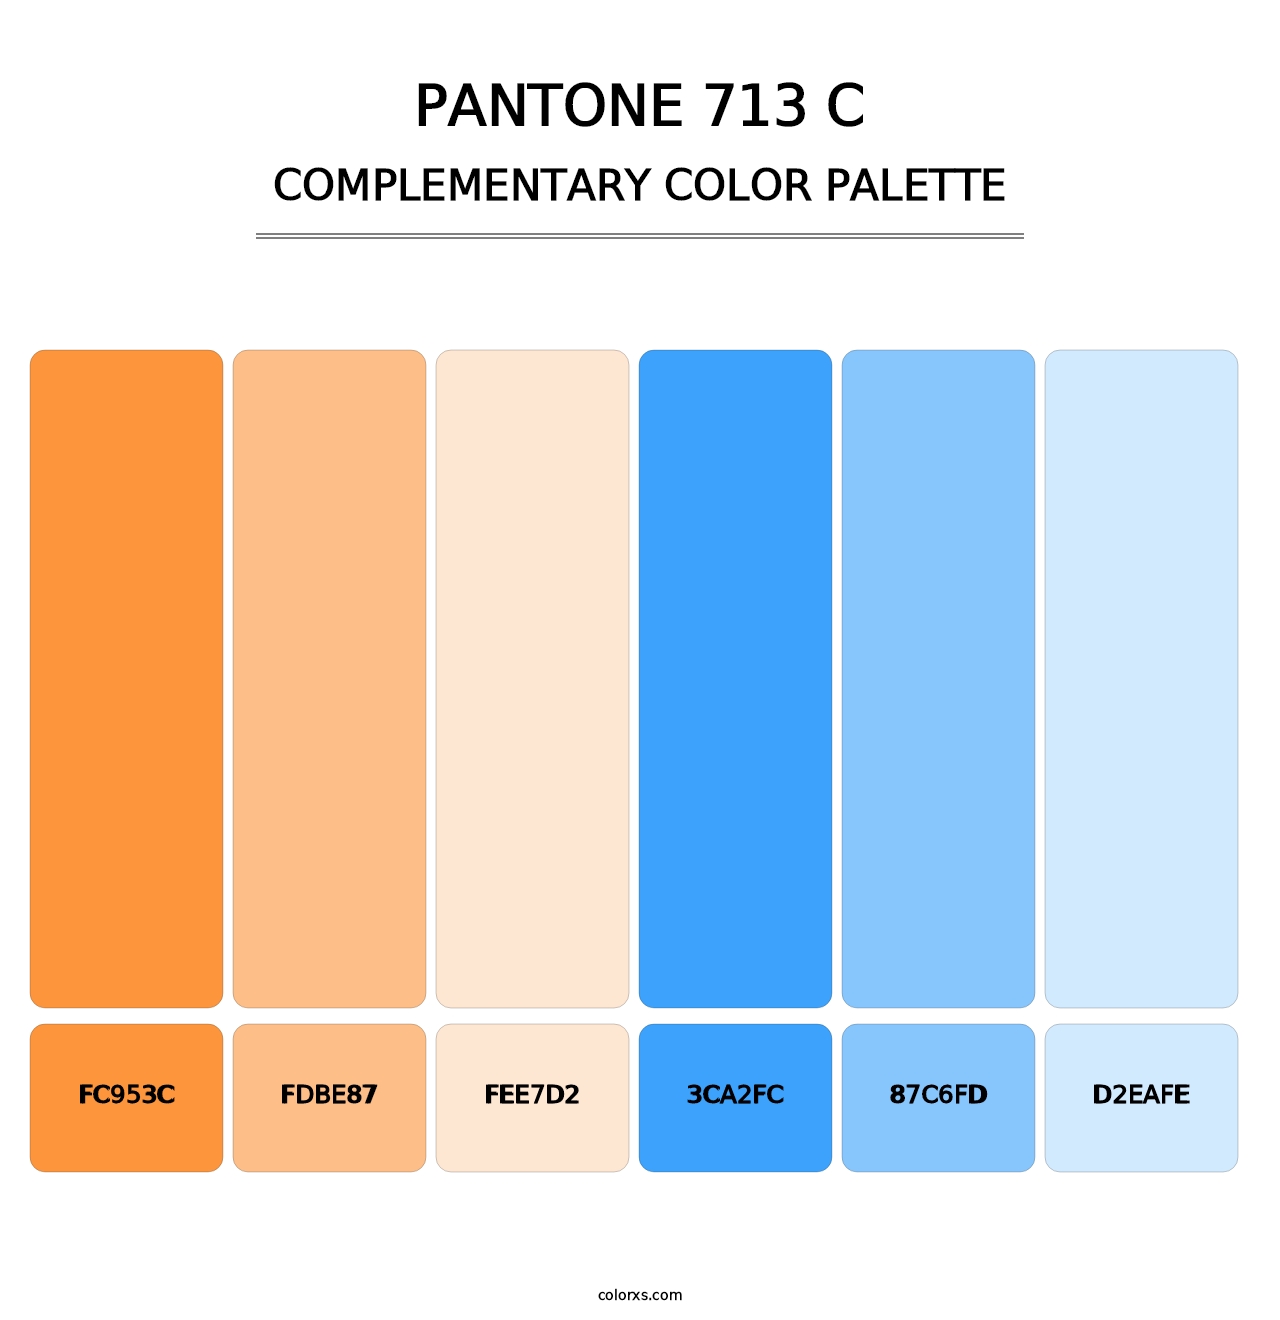 PANTONE 713 C - Complementary Color Palette